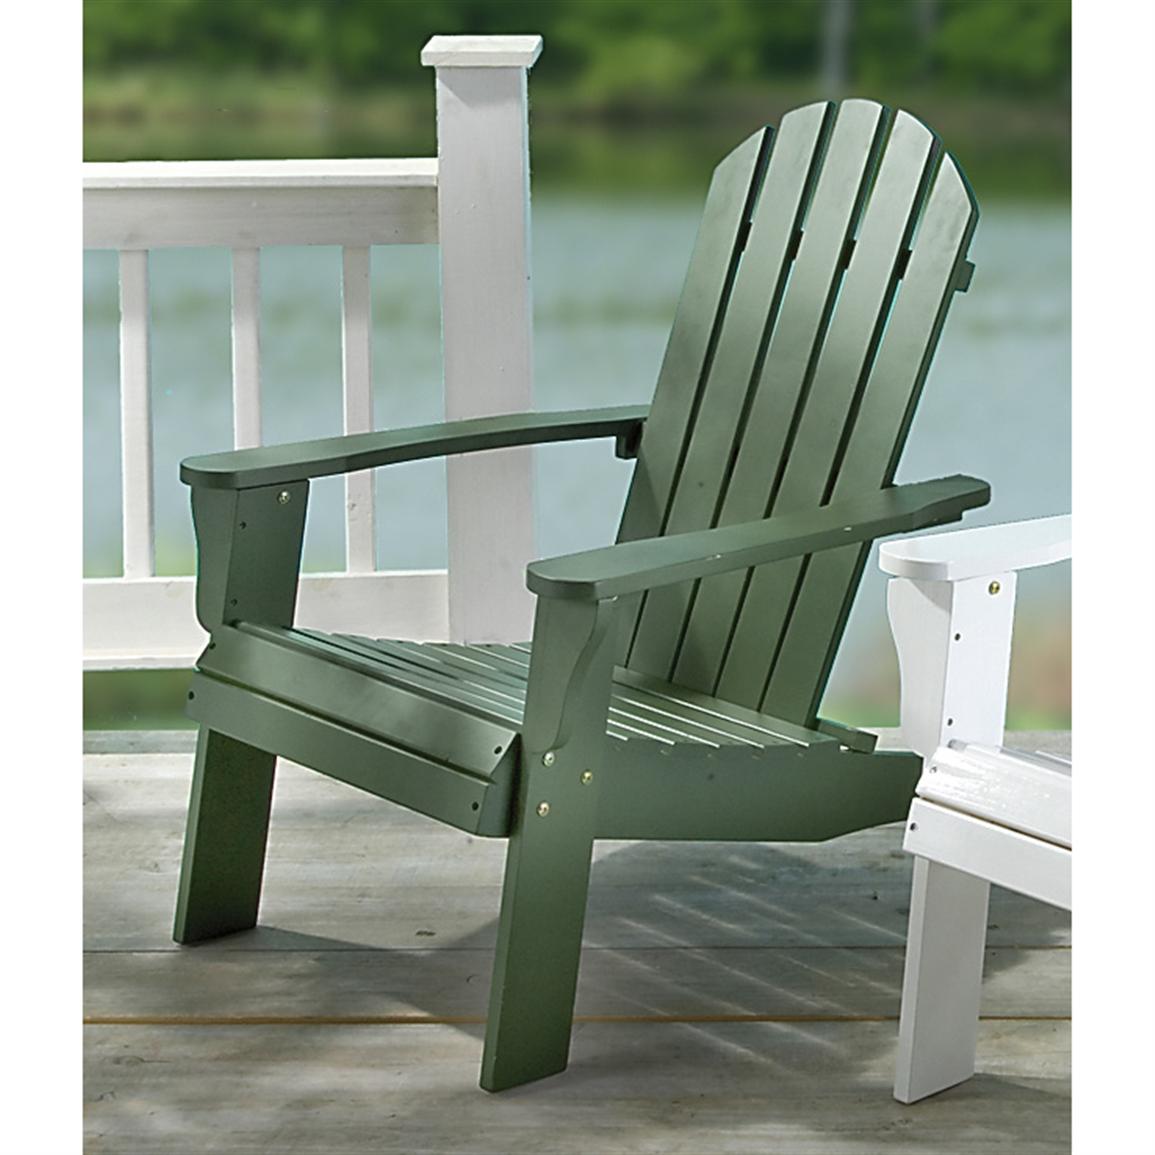 Painted Adirondack Chair 131144, Patio Furniture at